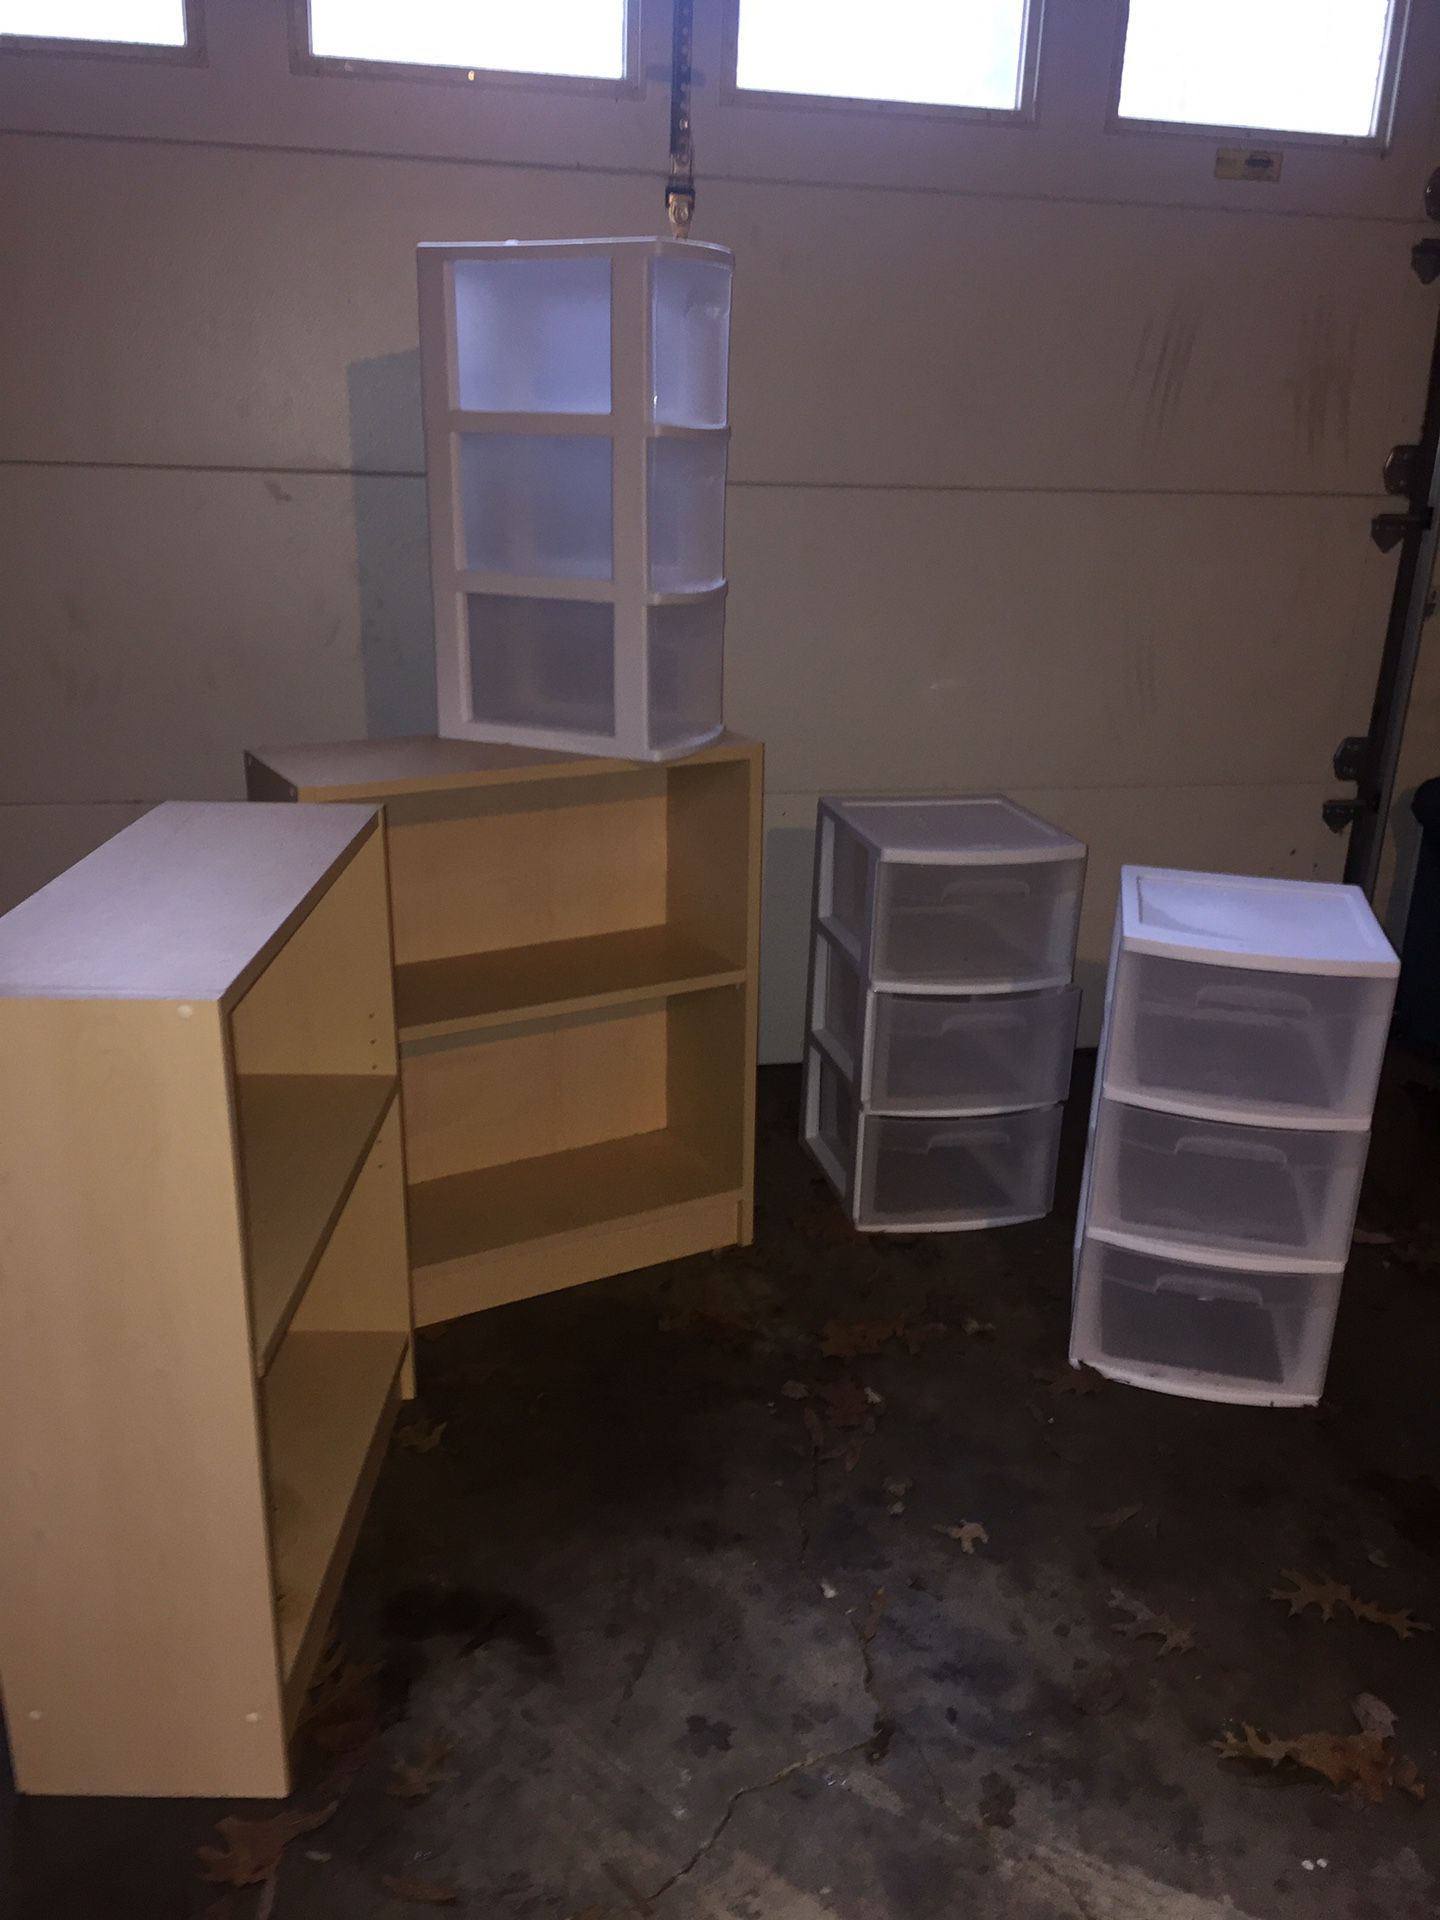 5 Pc. 2 shelves. 3 storage cabinets